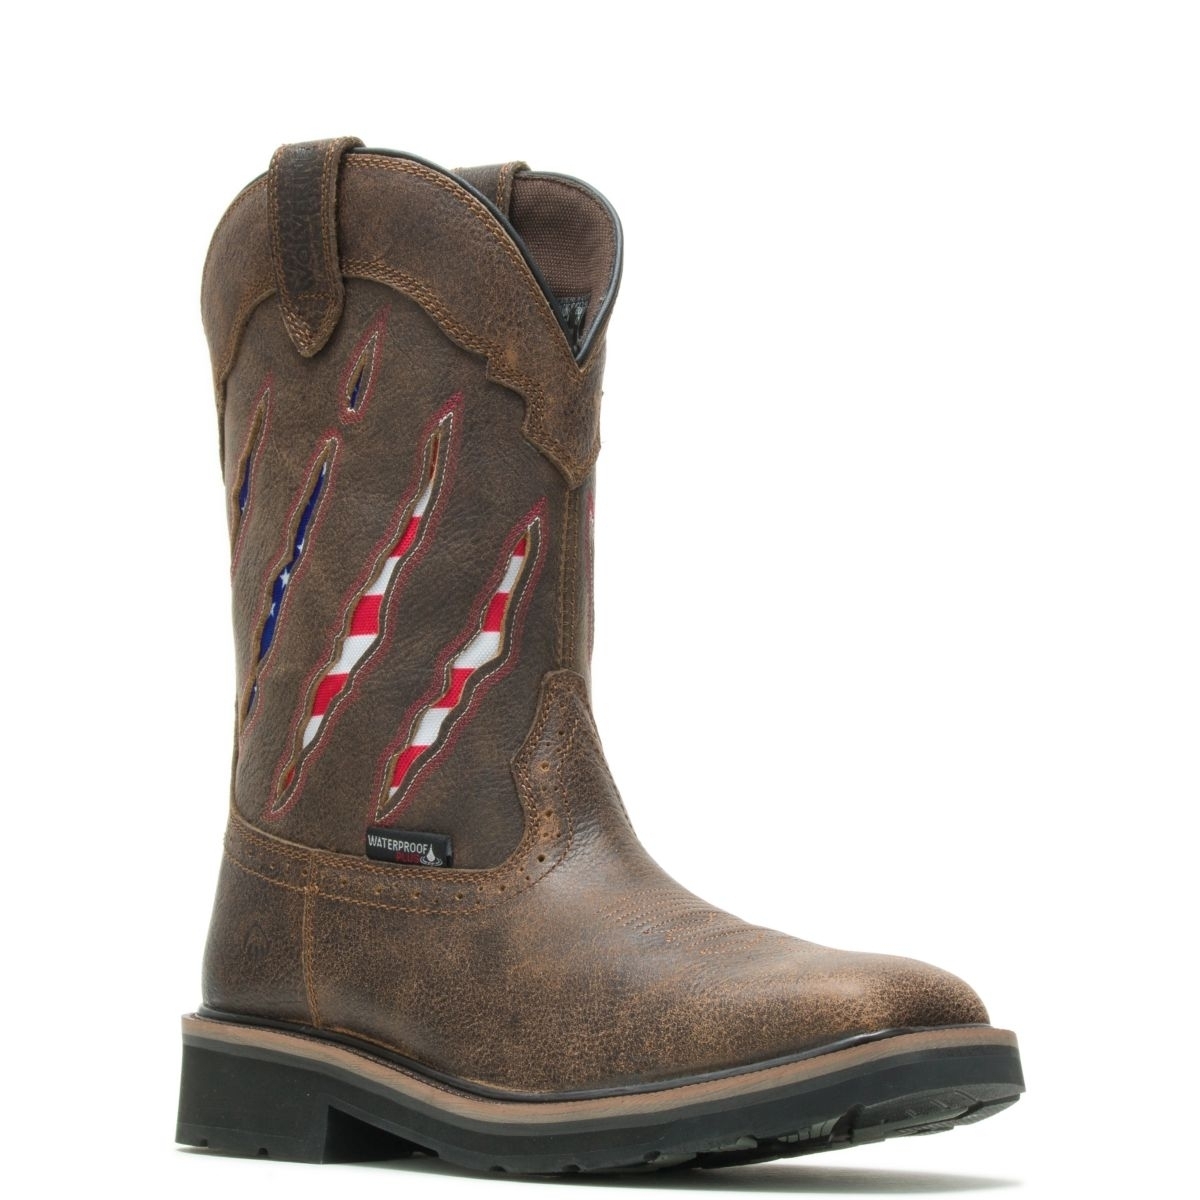 WOLVERINE Men's Rancher Claw Steel Toe Wellington Work Boot Brown/Flag - W201218 Flag/brown - Flag/brown, 8-M